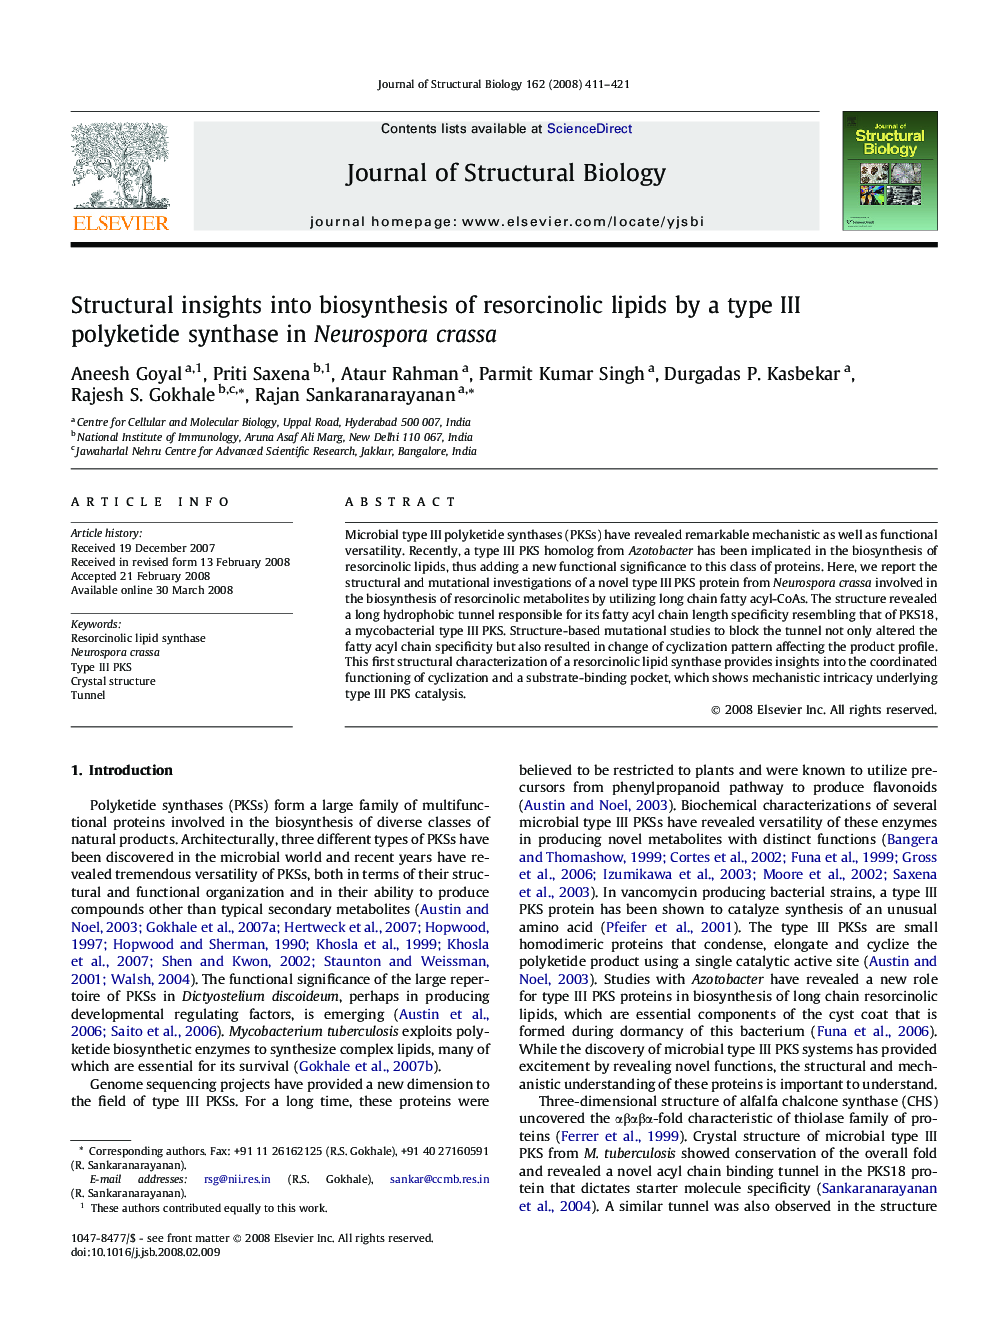 Structural insights into biosynthesis of resorcinolic lipids by a type III polyketide synthase in Neurospora crassa